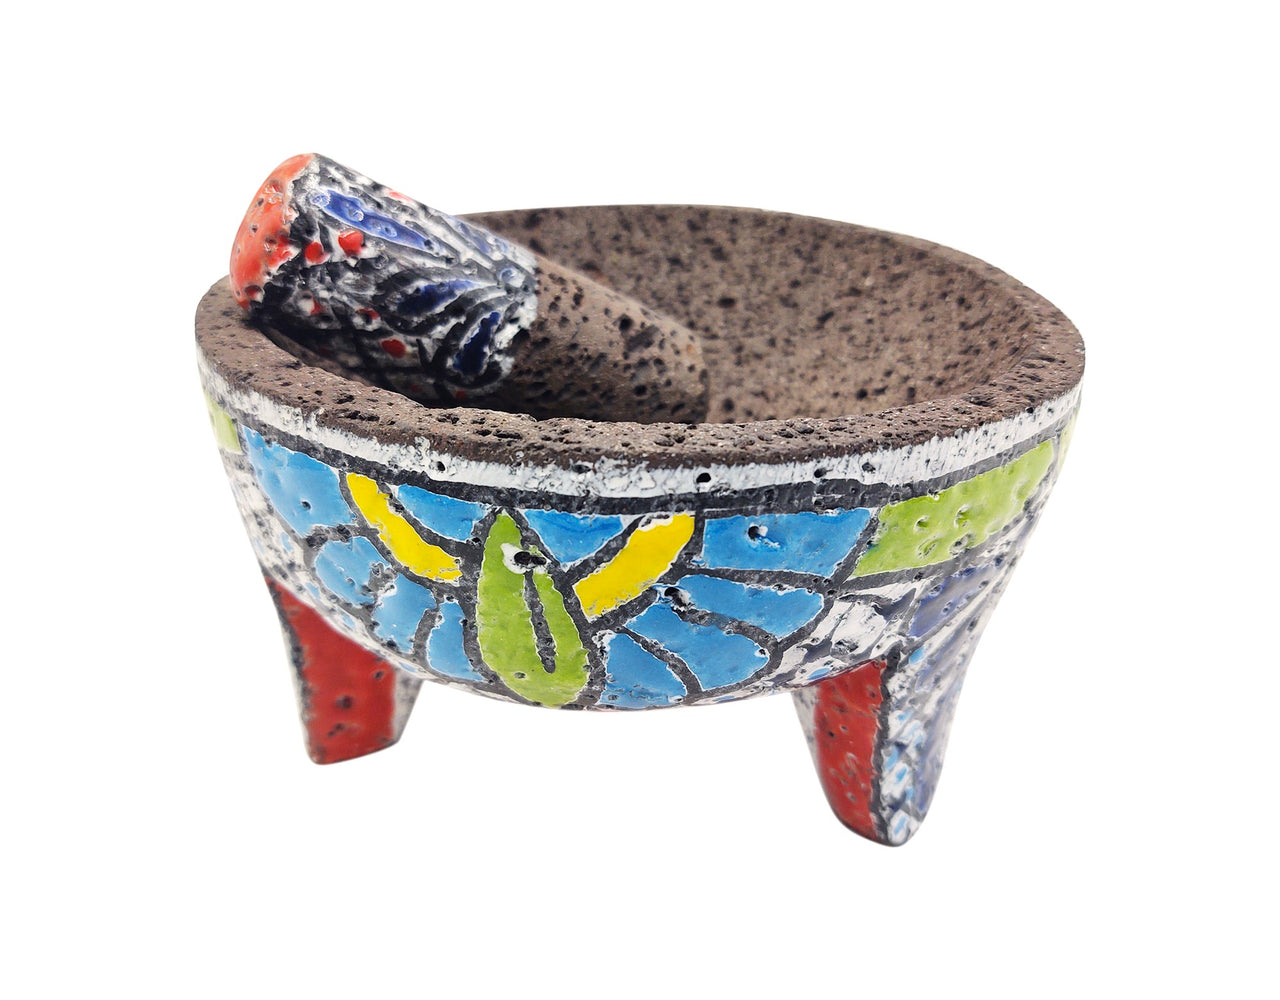 Molcajete de Mexico - Lava Rock Mortar & Pestle (8"L x 8"W x 4.5"H) Hand Painted - VAIRABLE Colors ON Stone - Mexican Kitchen Tool